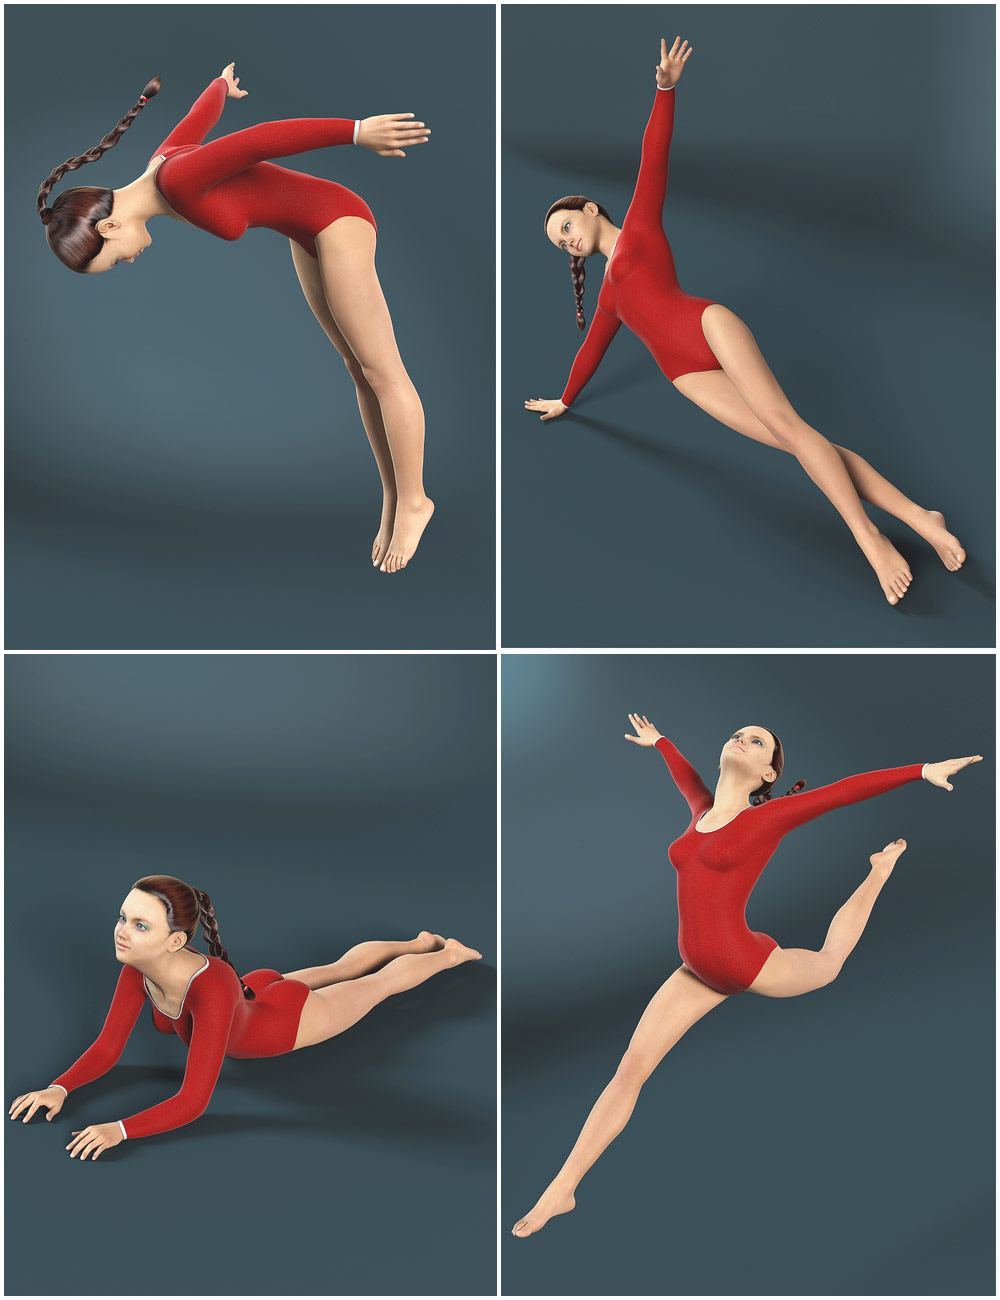 Josie Sport Poses by: Muscleman, 3D Models by Daz 3D